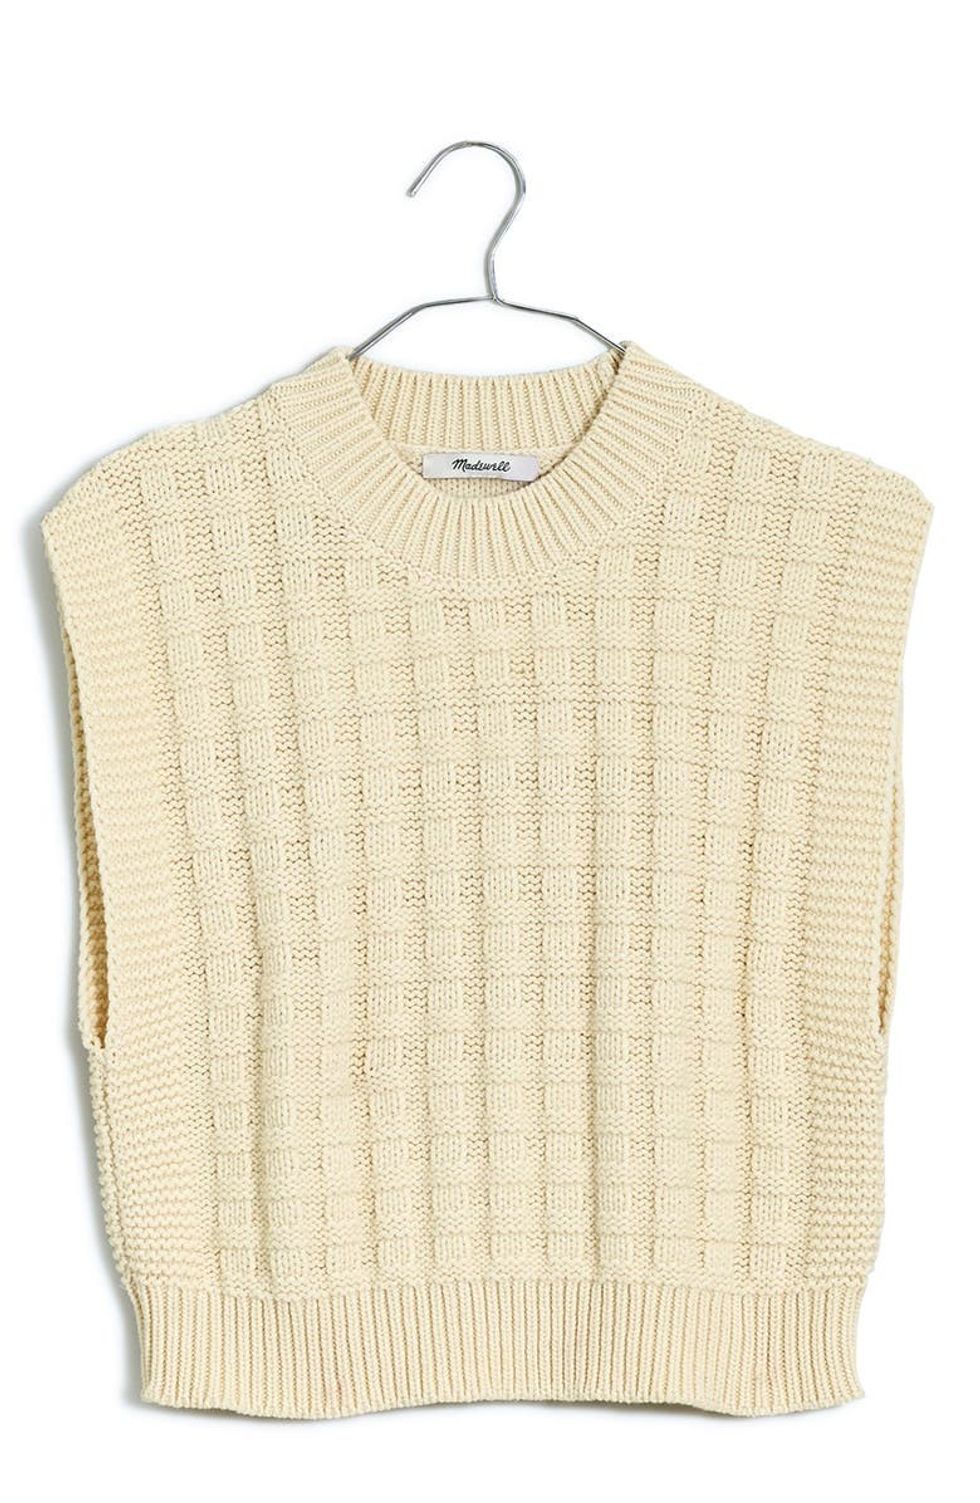 Madewell Checkered Stitch Wedge Sweater Vest